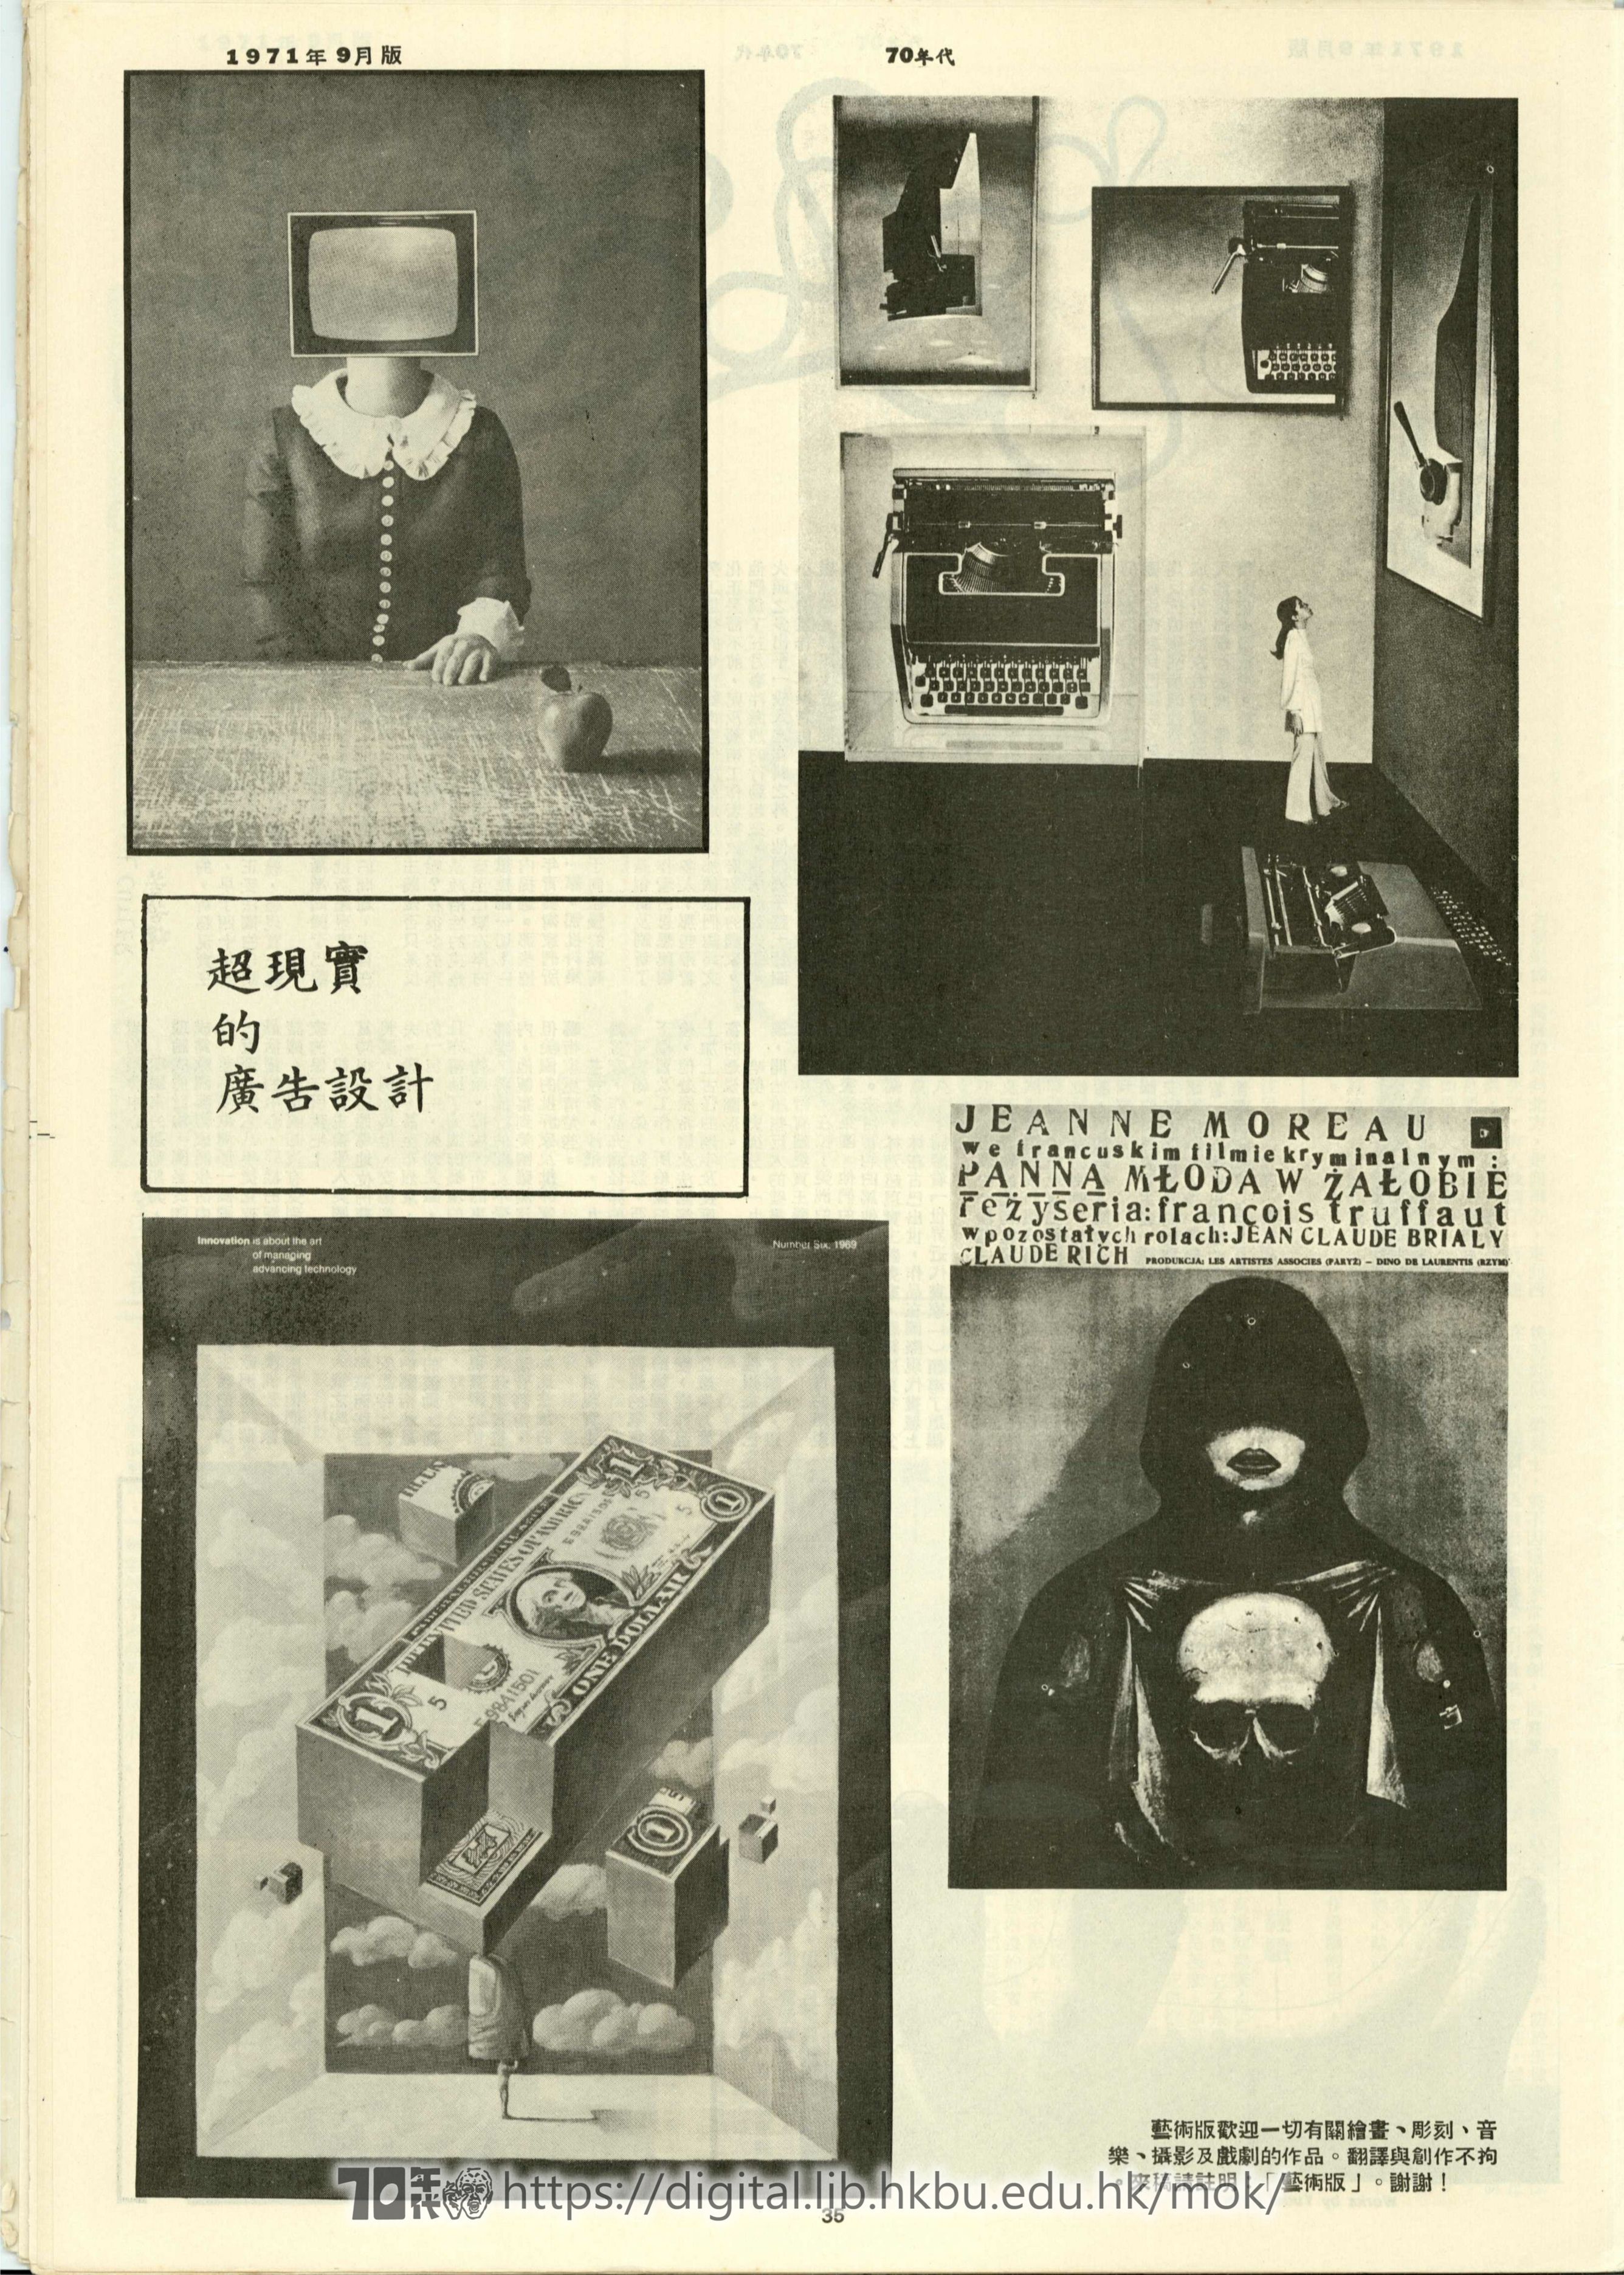  23 Influence of surrealism on advertisement design 小克 